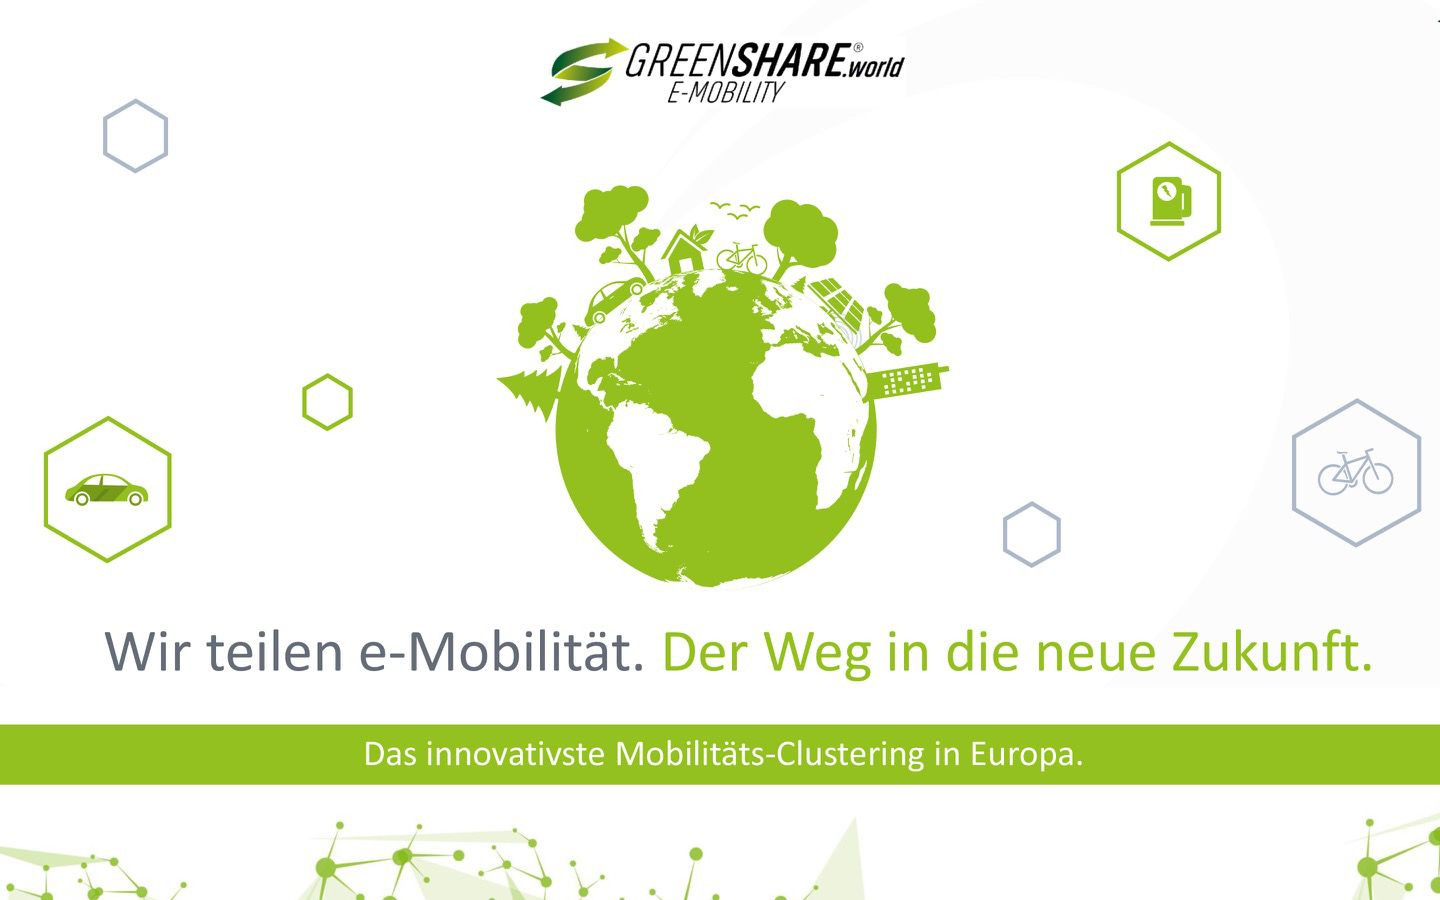 GreenShare - sharing e-mobility